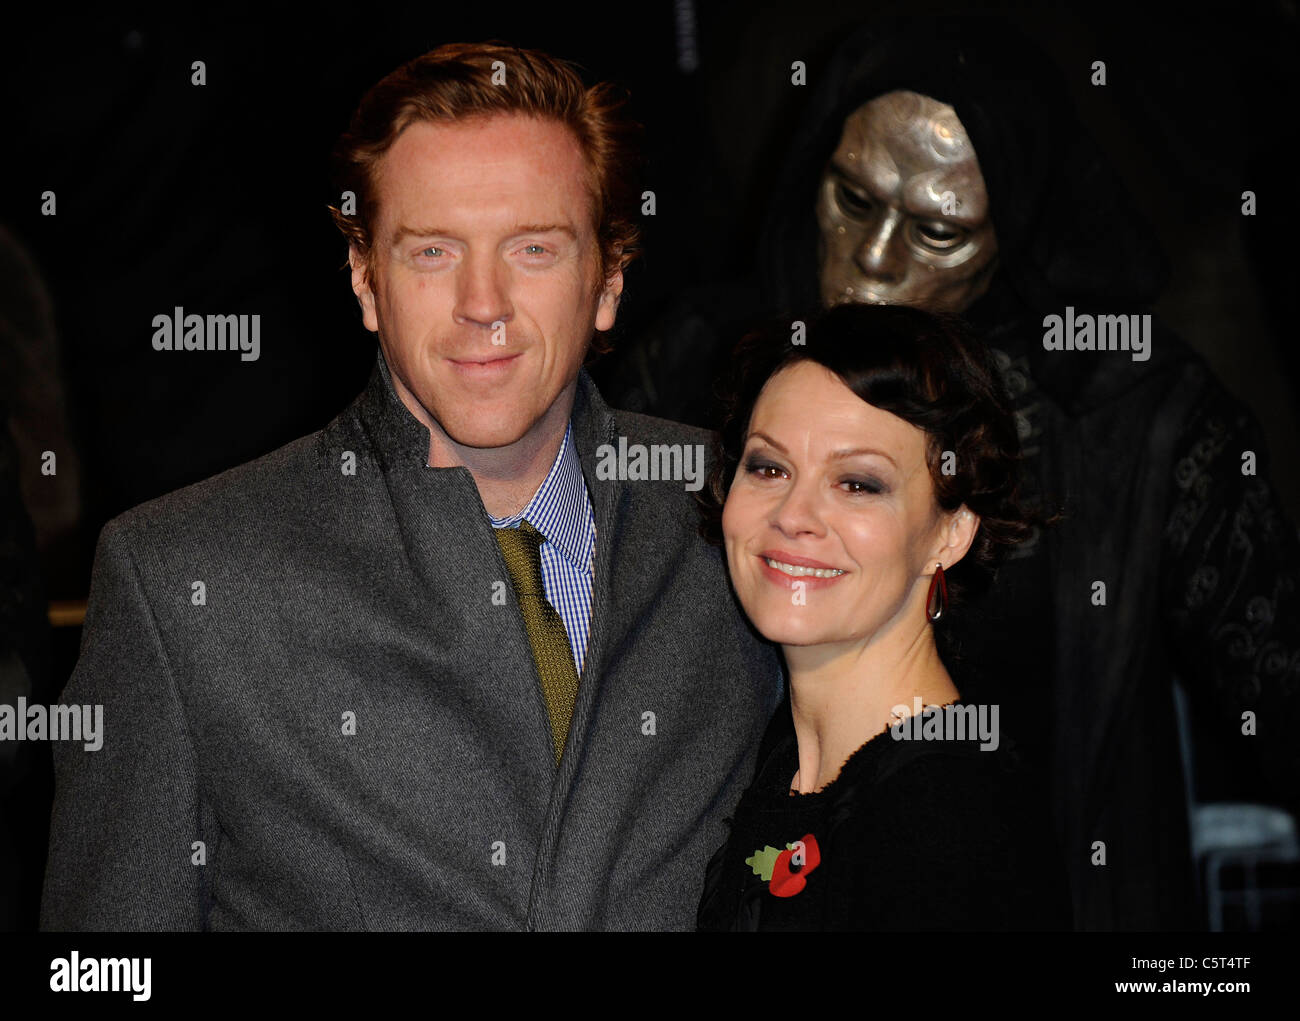 Damian Lewis and Helen McCrory 2010 - Image Copyright Hollywood Headshots 2011 Stock Photo